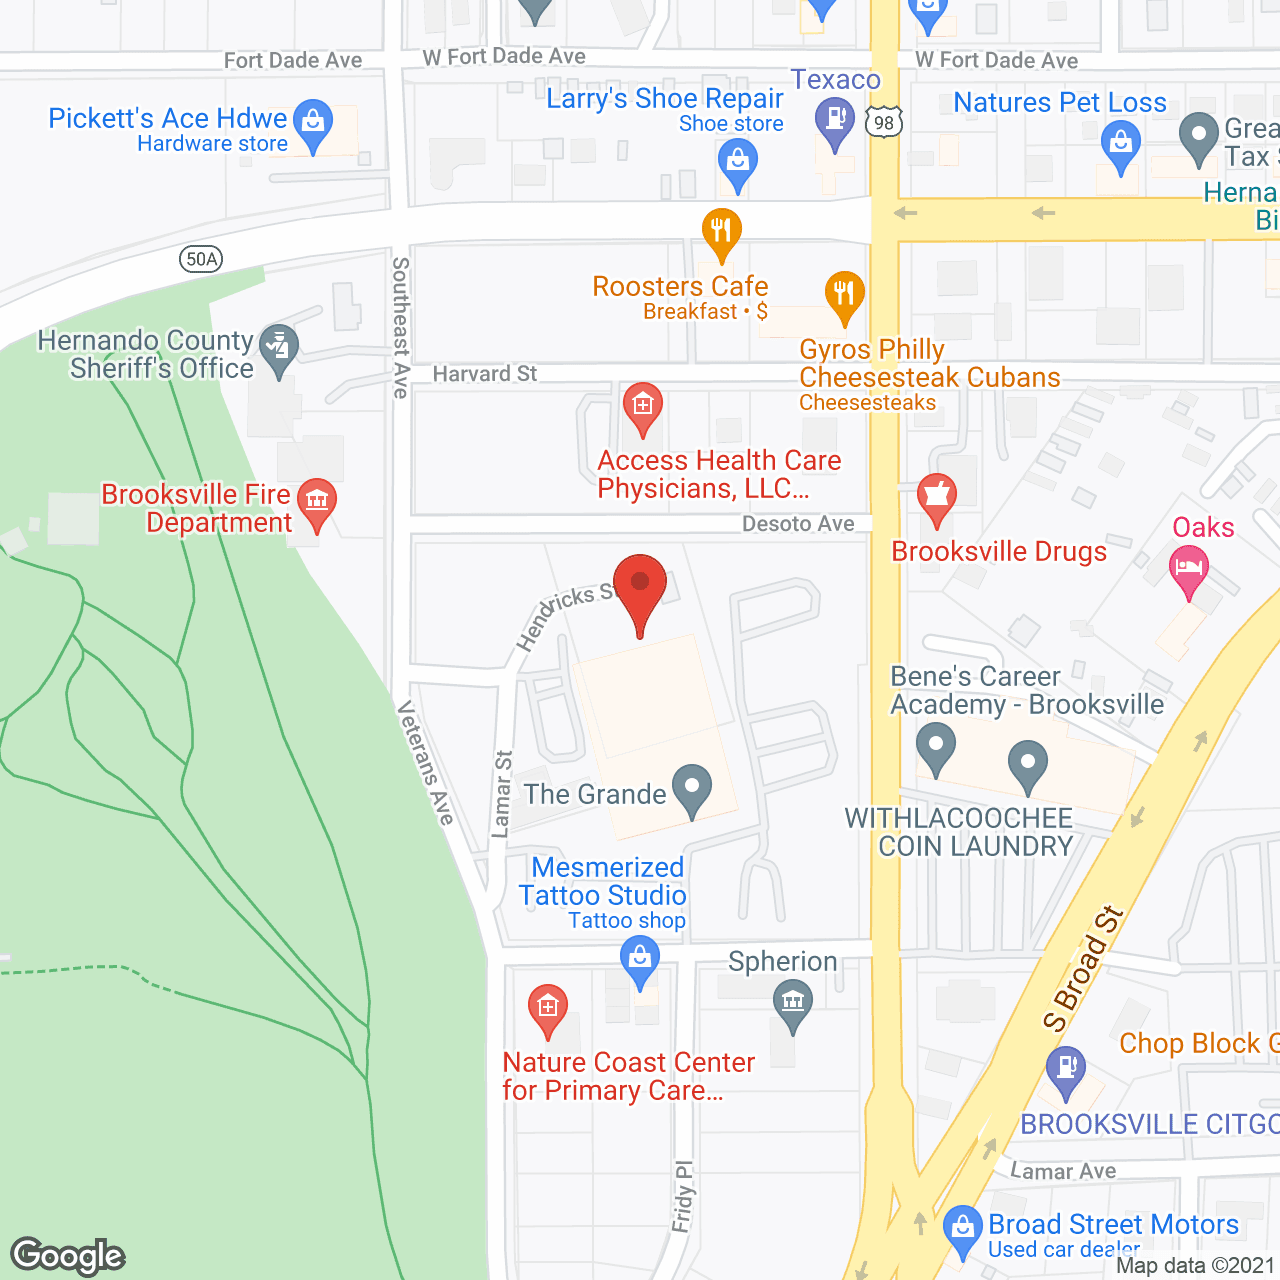 The Grande in google map